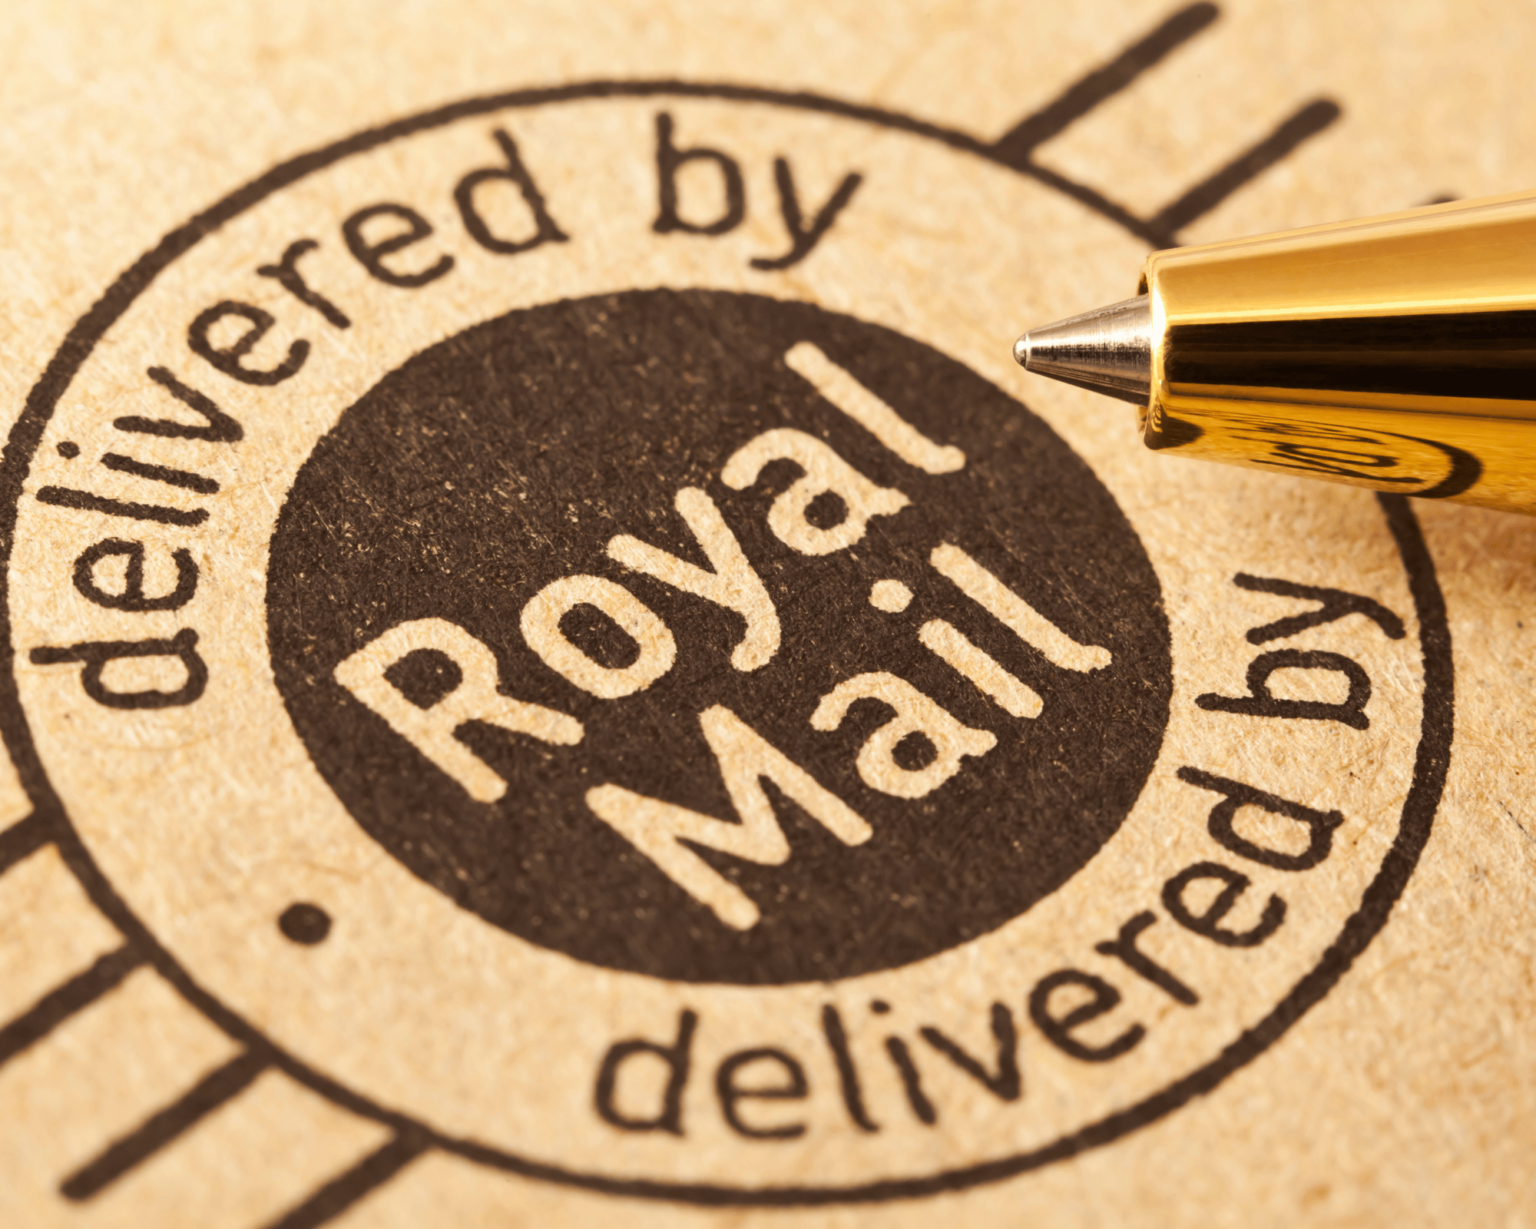 royal mail stamp on envelope